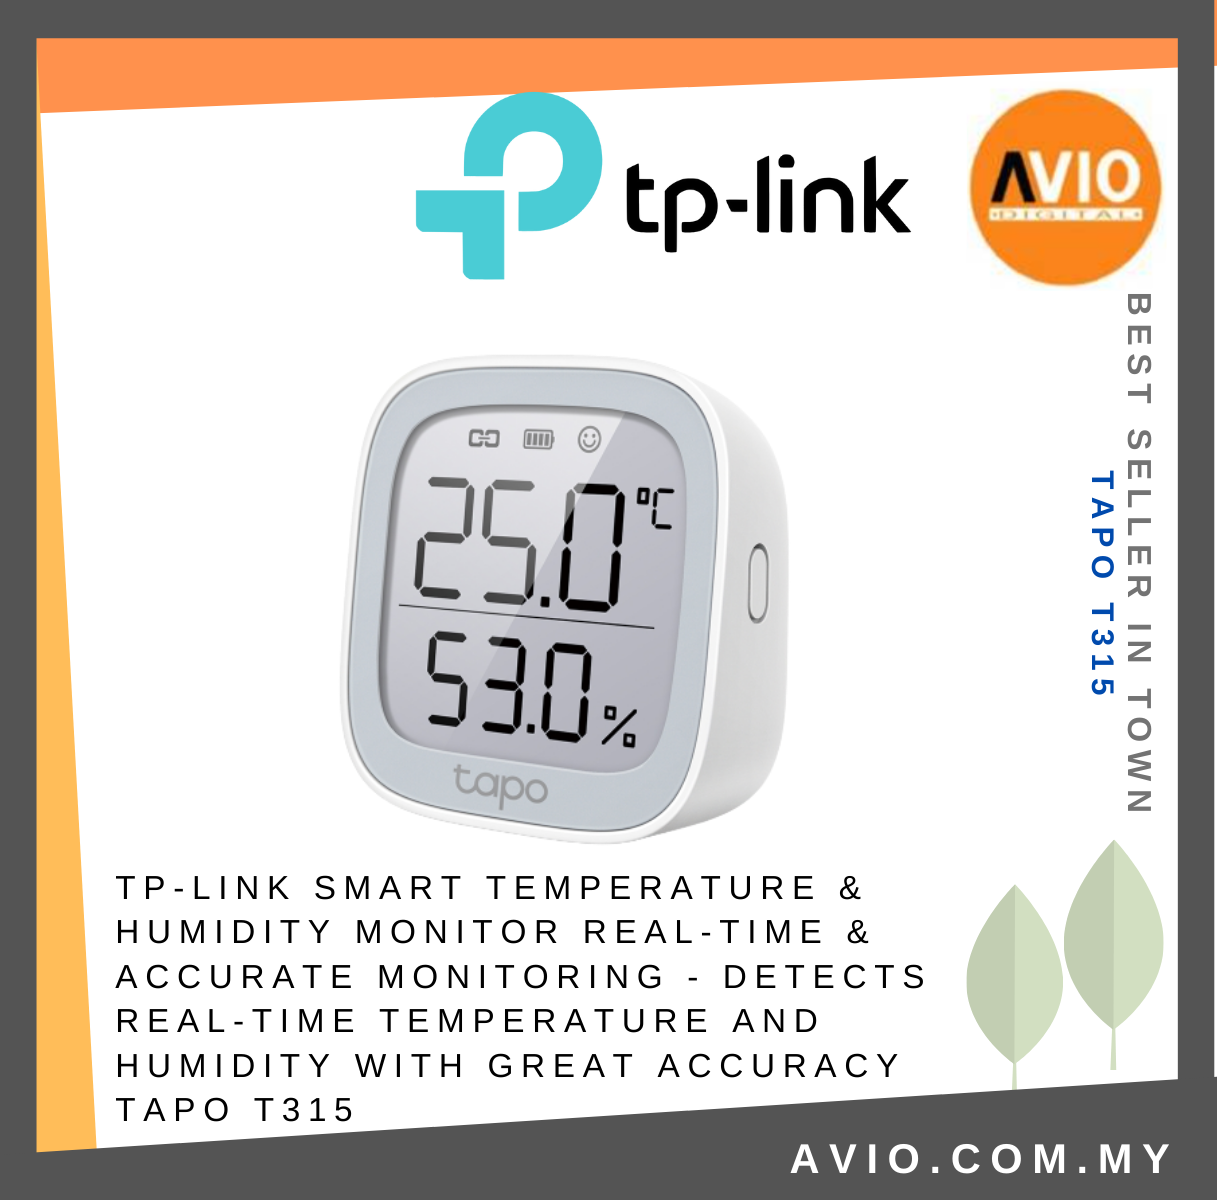 Tapo Smart Temperature & Humidity Monitor, Free Data Storage, Real